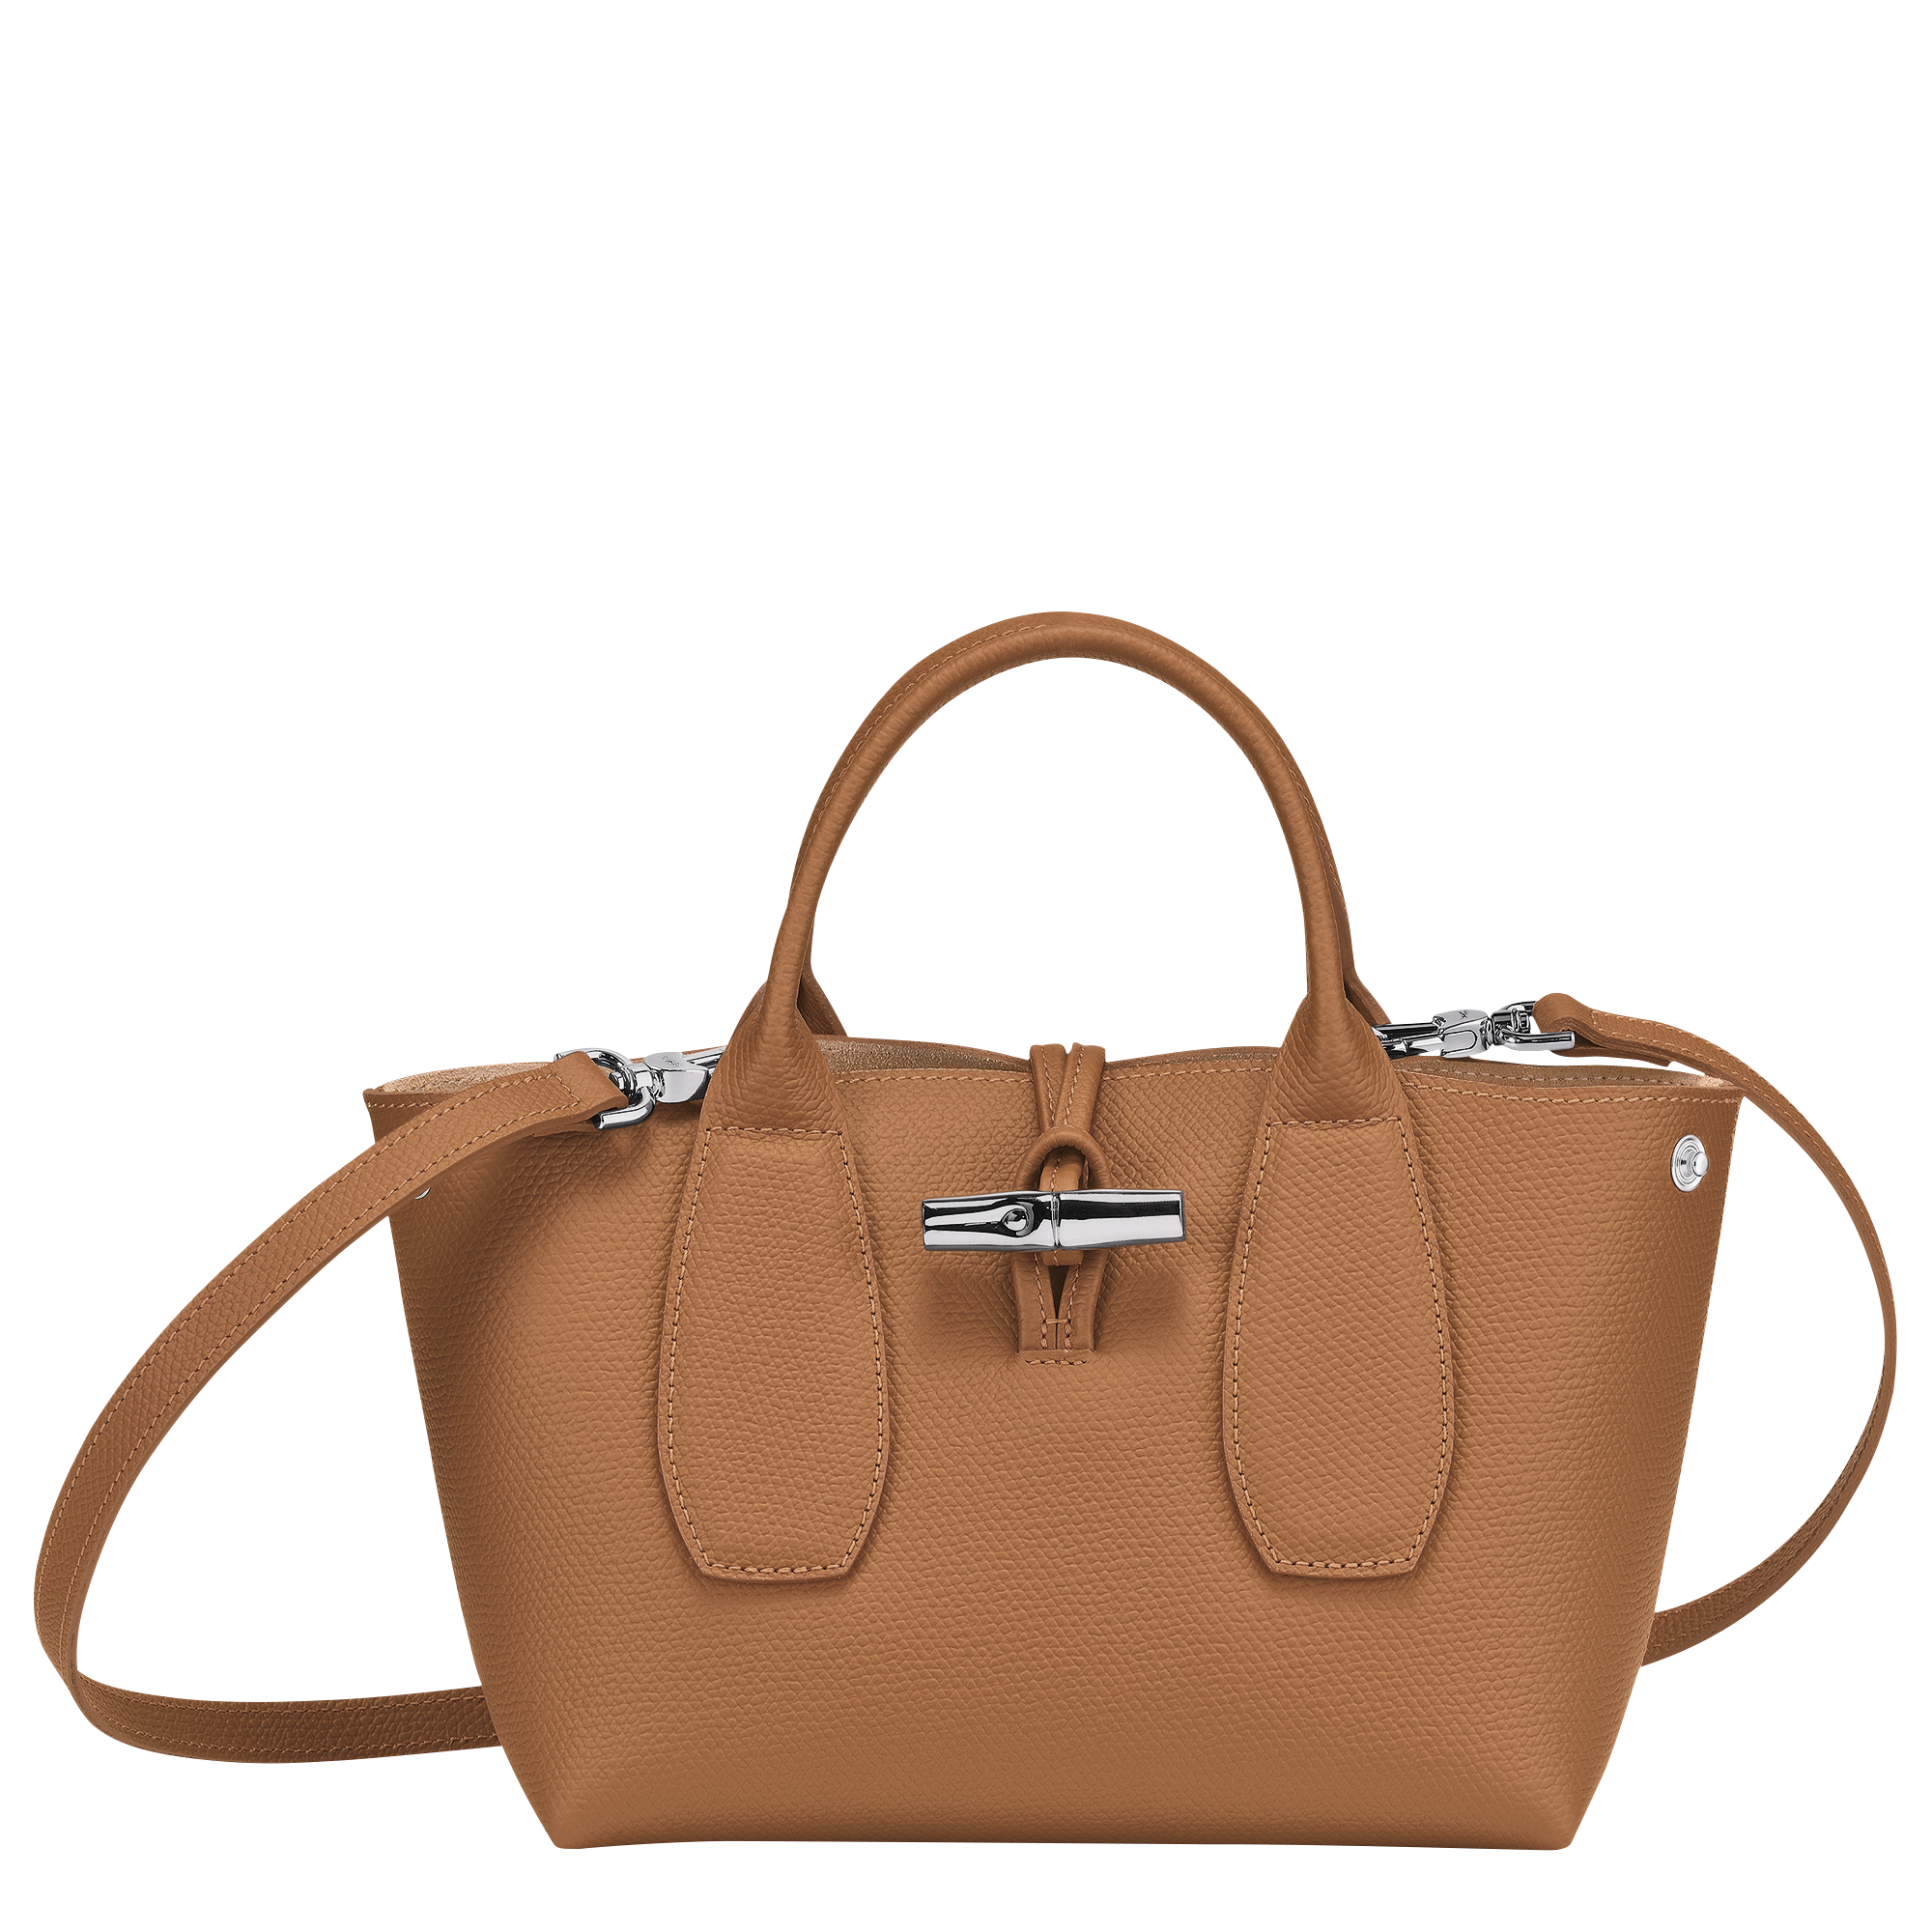 Le Roseau Handbag S, Natural